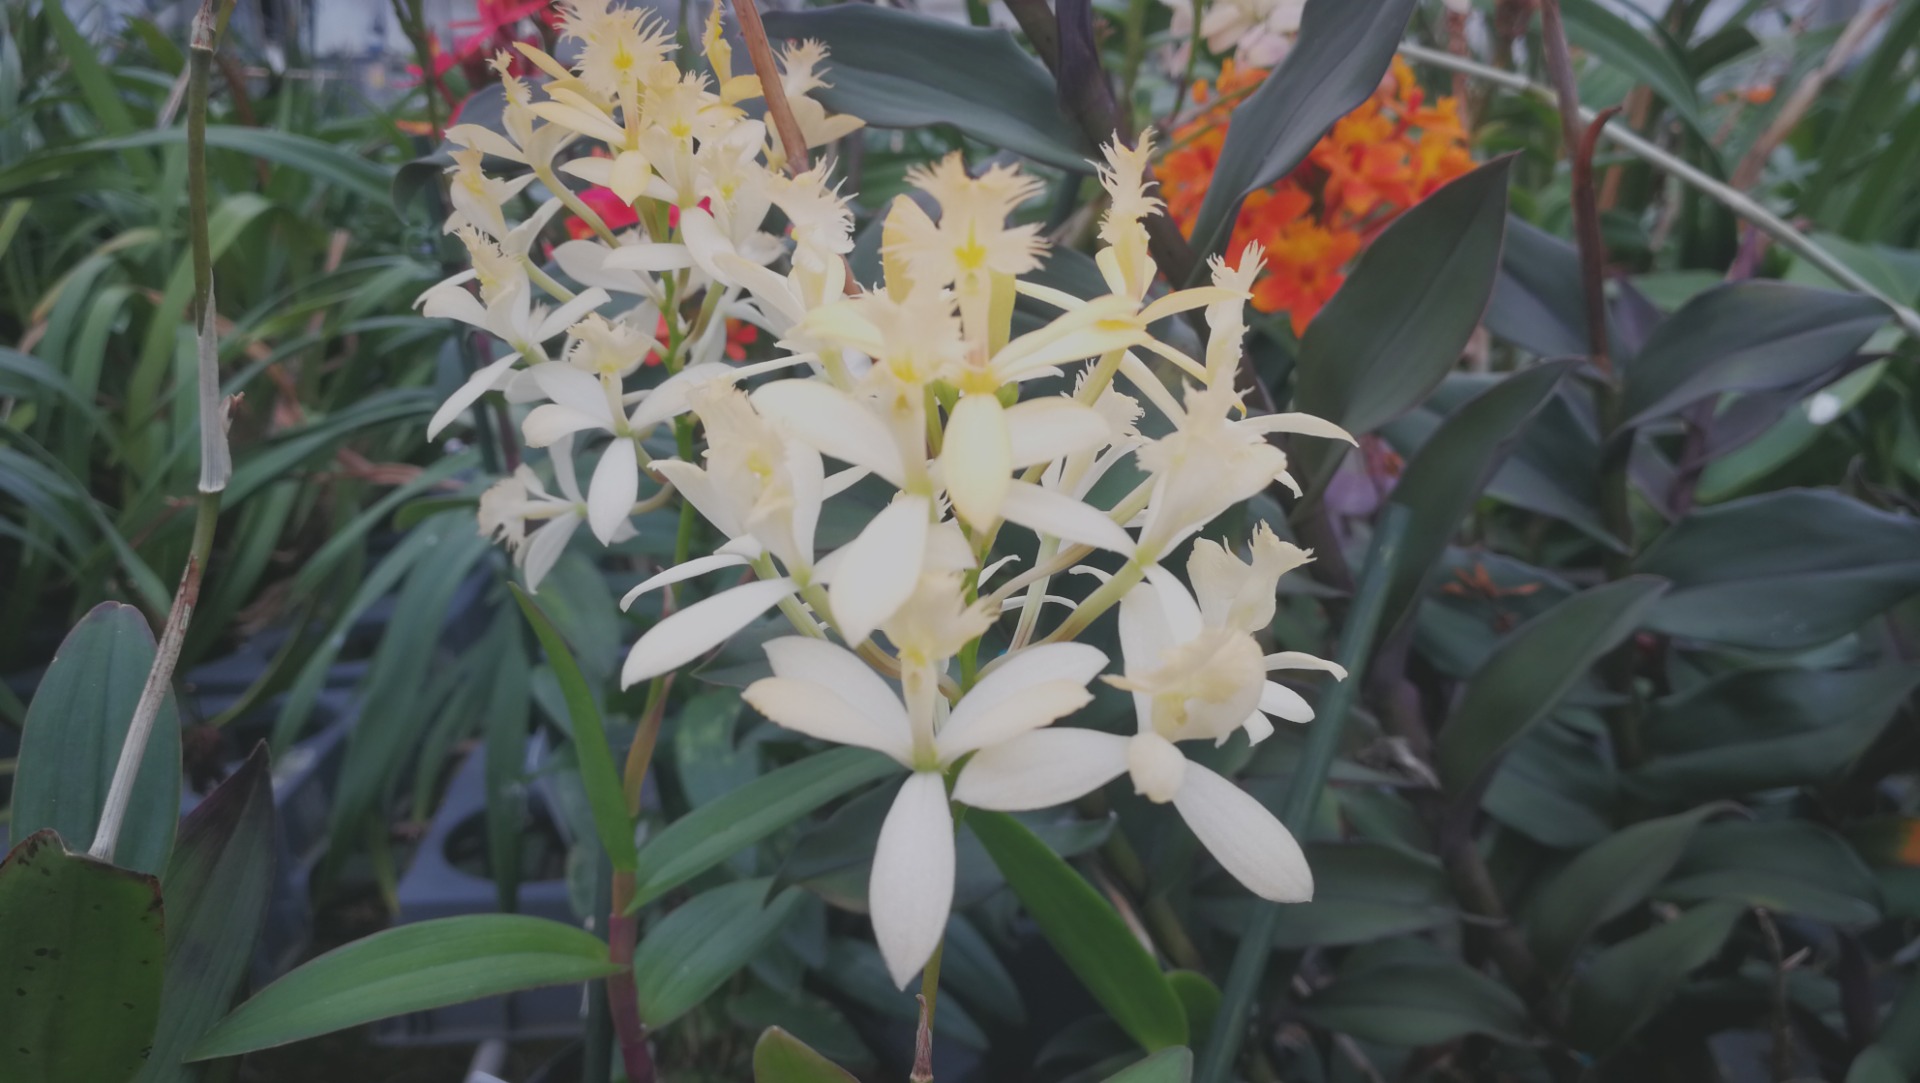 jewel orchids